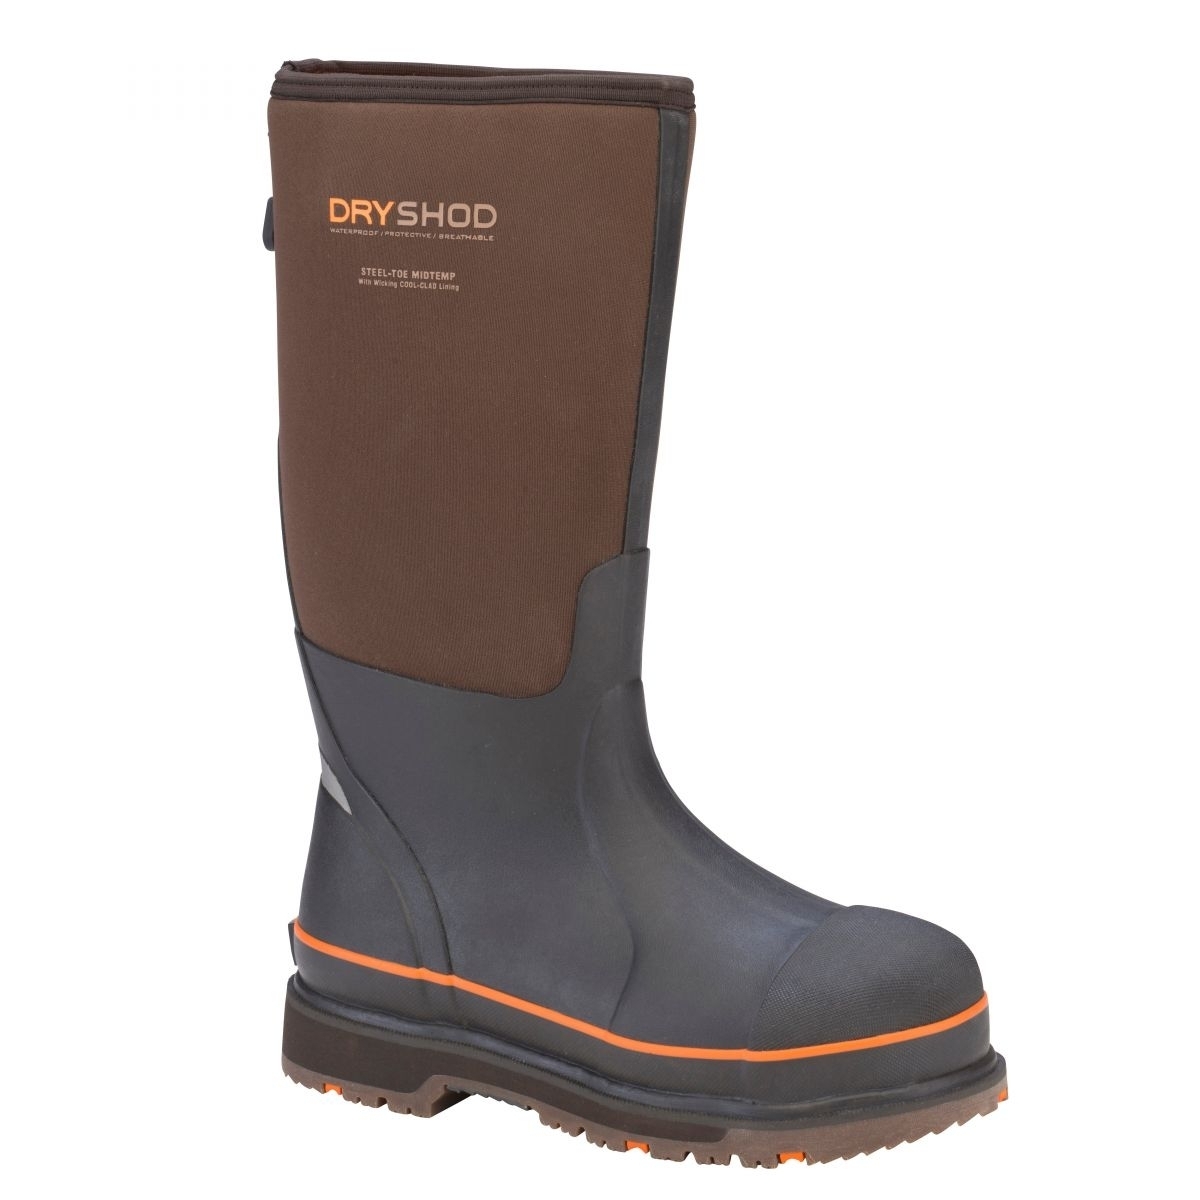 DRYSHOD WORK Men's Steel Toe WIXIT Cool-Cladâ¢ Waterproof Work Boot Brown/Orange - STT-UH-BR ONE SIZE BROWN/ORANGE - BROWN/ORANGE, 16